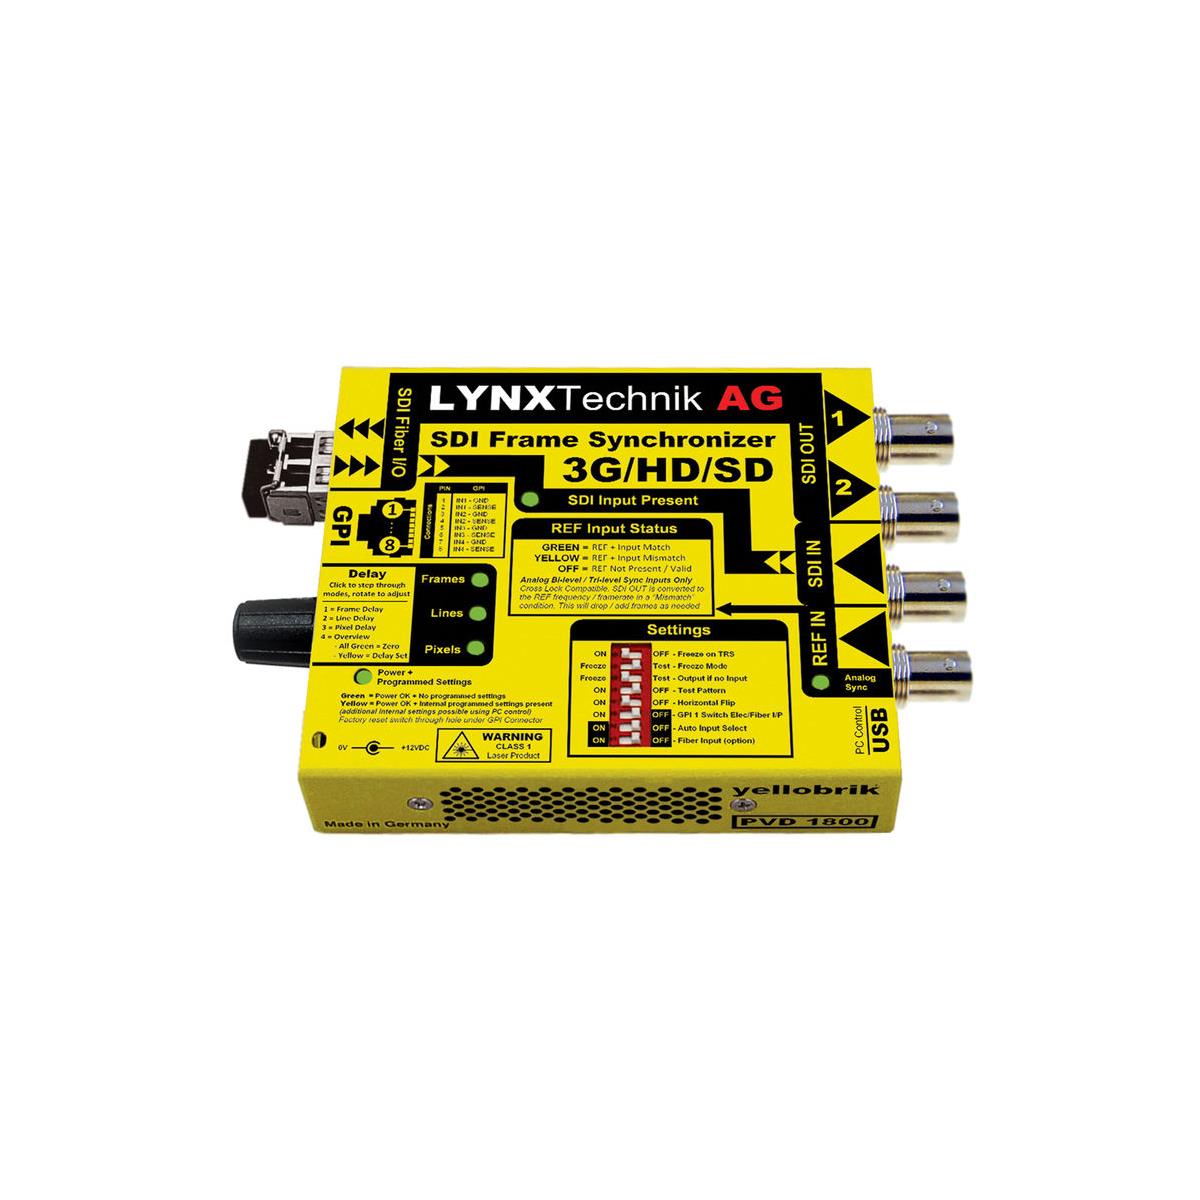 Image of Lynx Technik AG PVD 1800 SD/HD/3G SDI Frame Synchronizer with Fiber Optic I/O